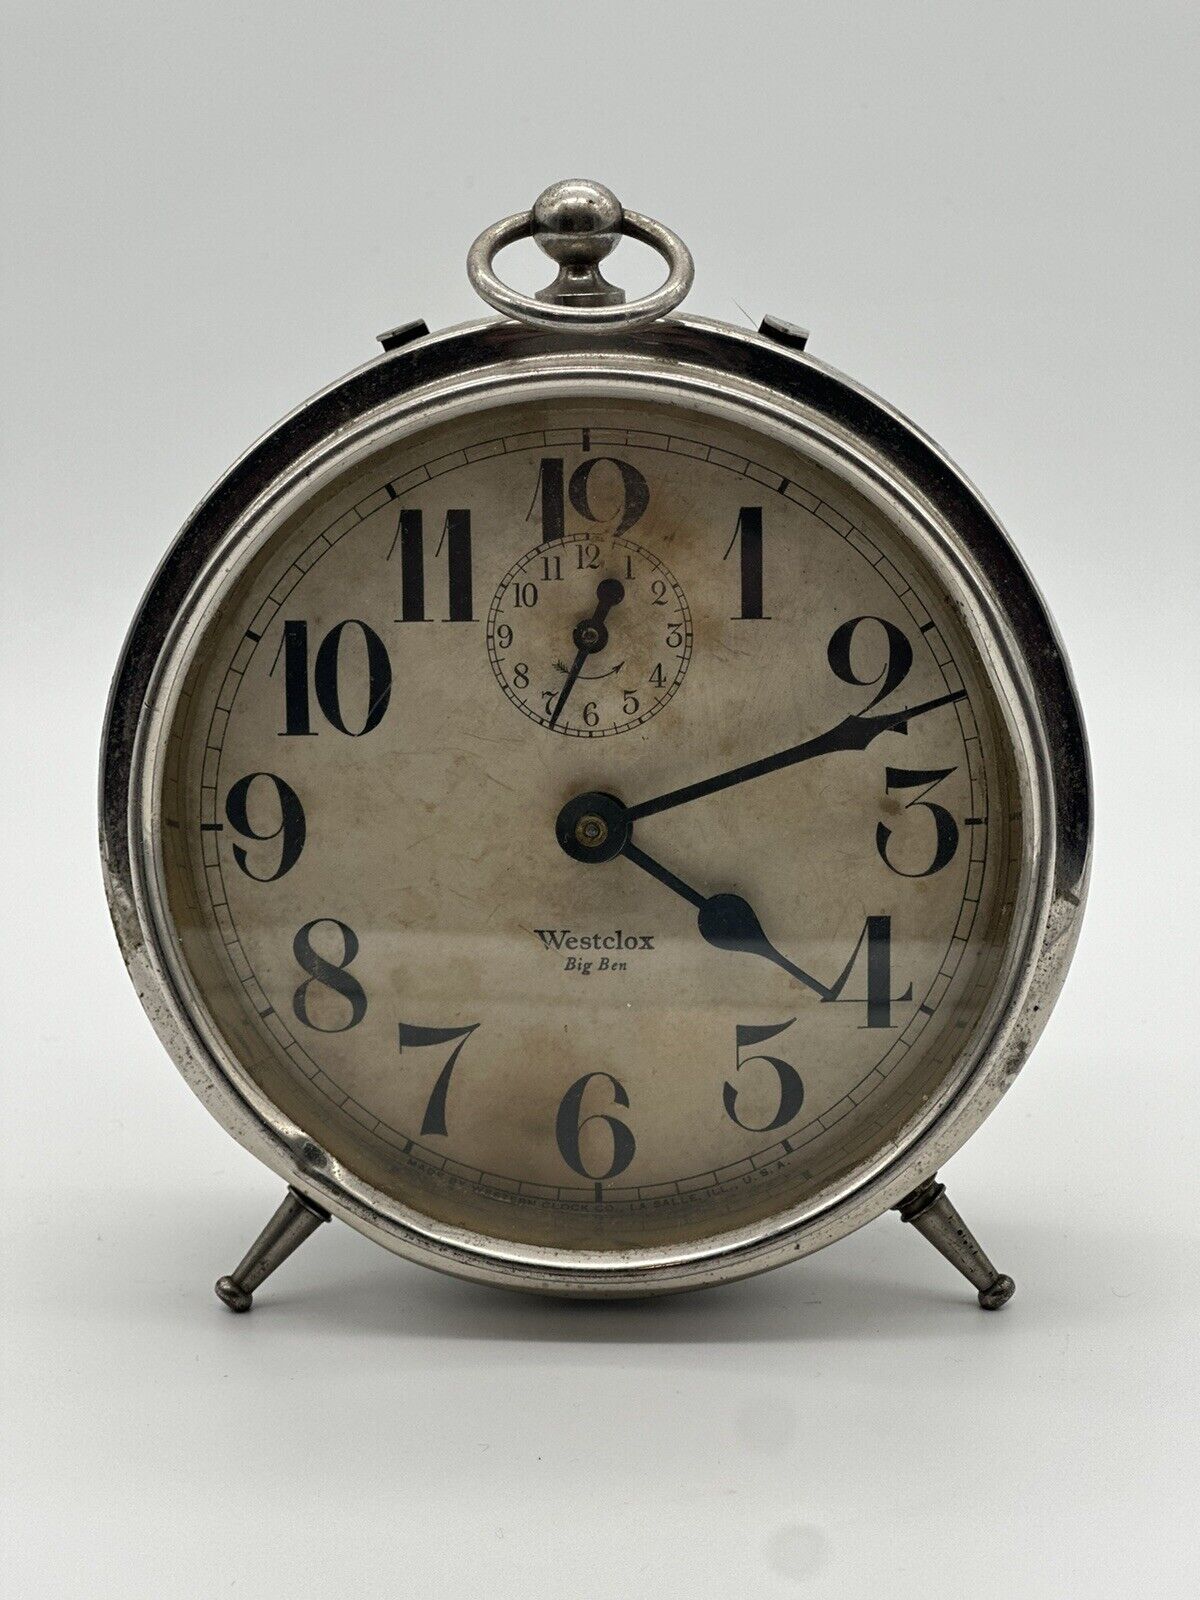 Westclox Big Ben Alarm Clock  Vintage Analog Wind Up Mechanical